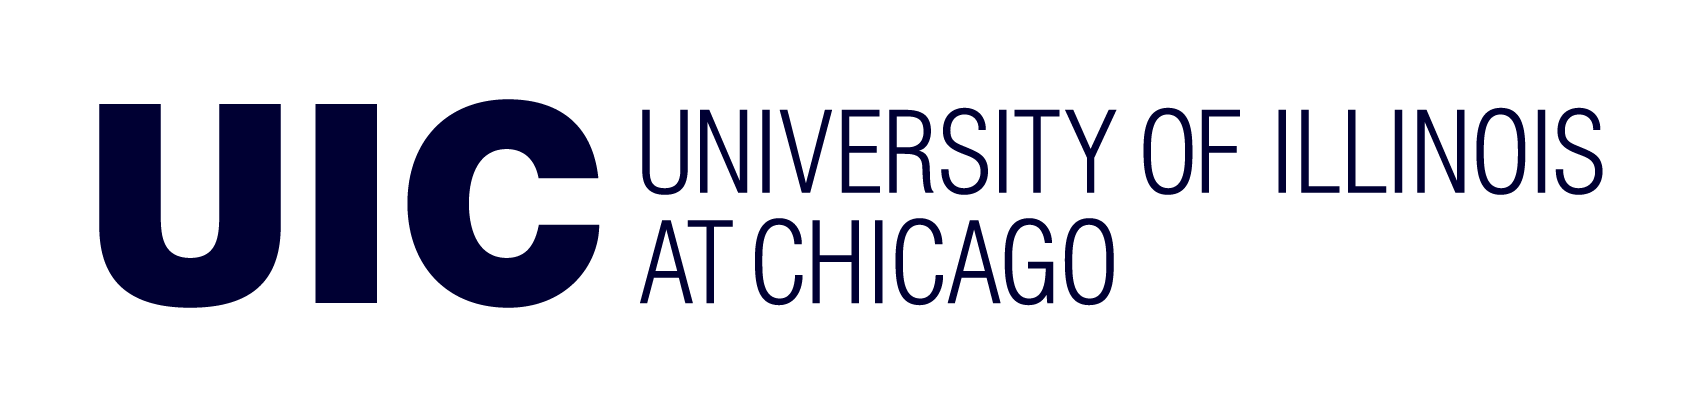 University of Illinois at Chicago - online programs